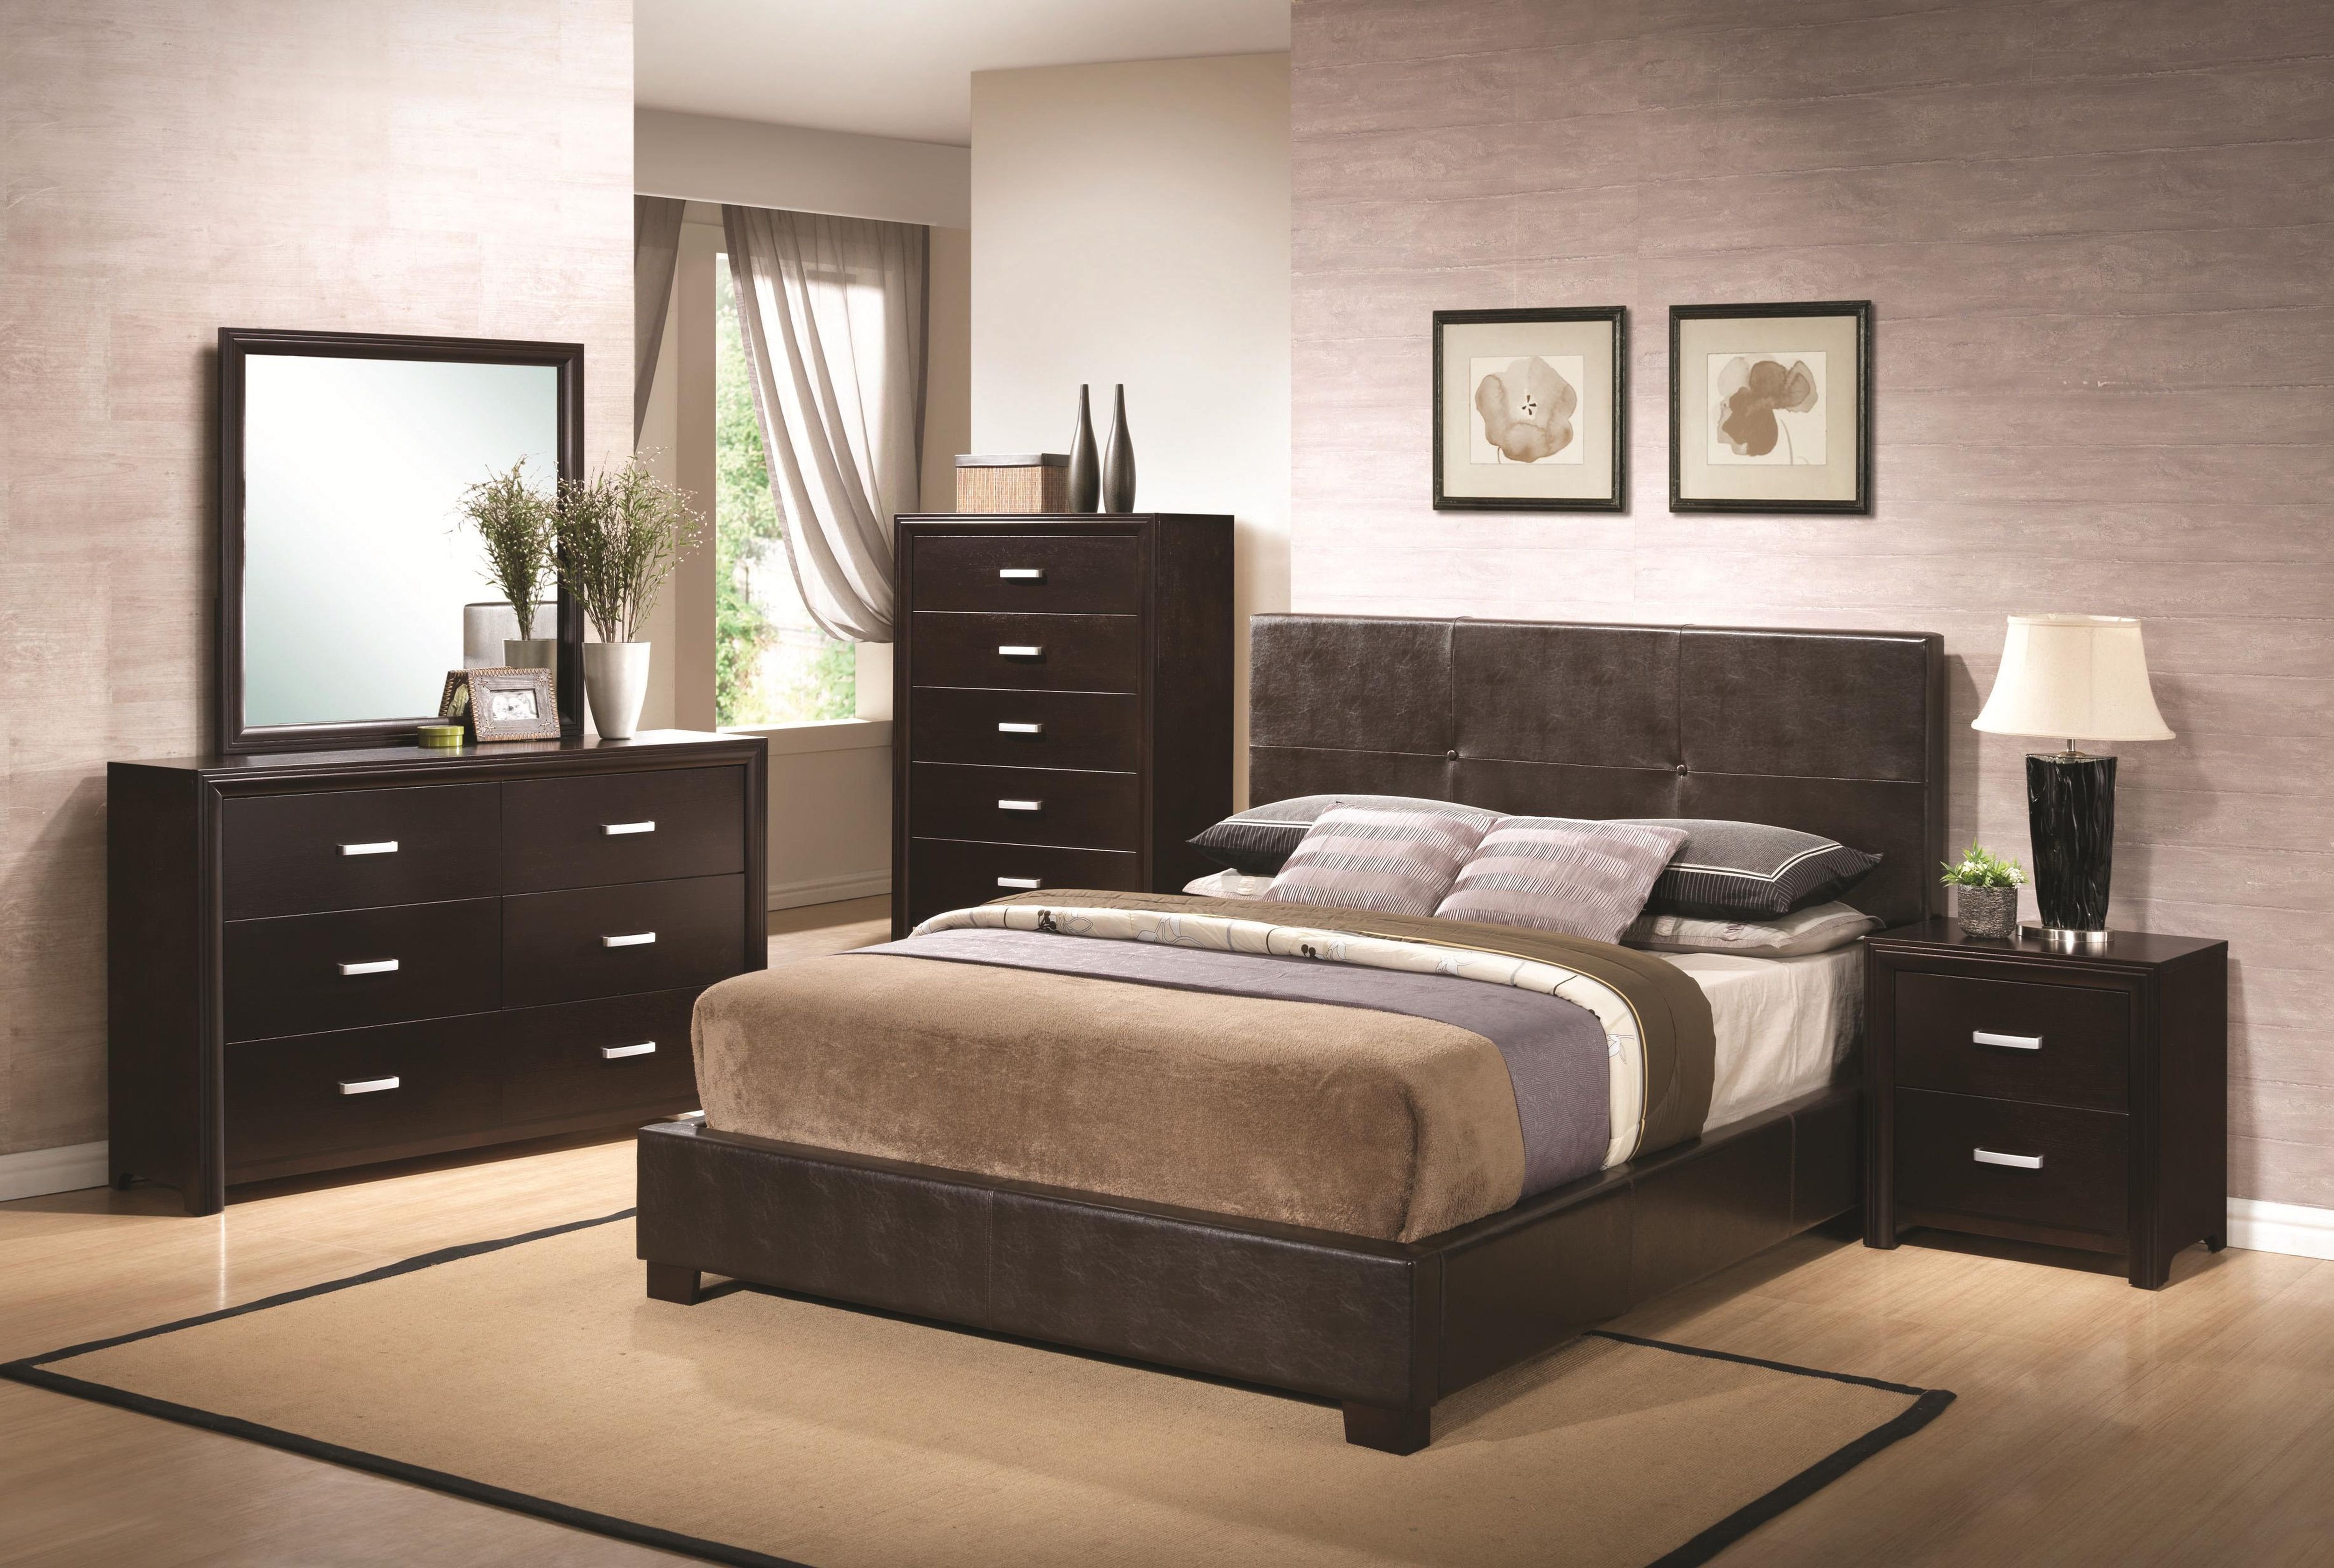 ikea cream bedroom furniture